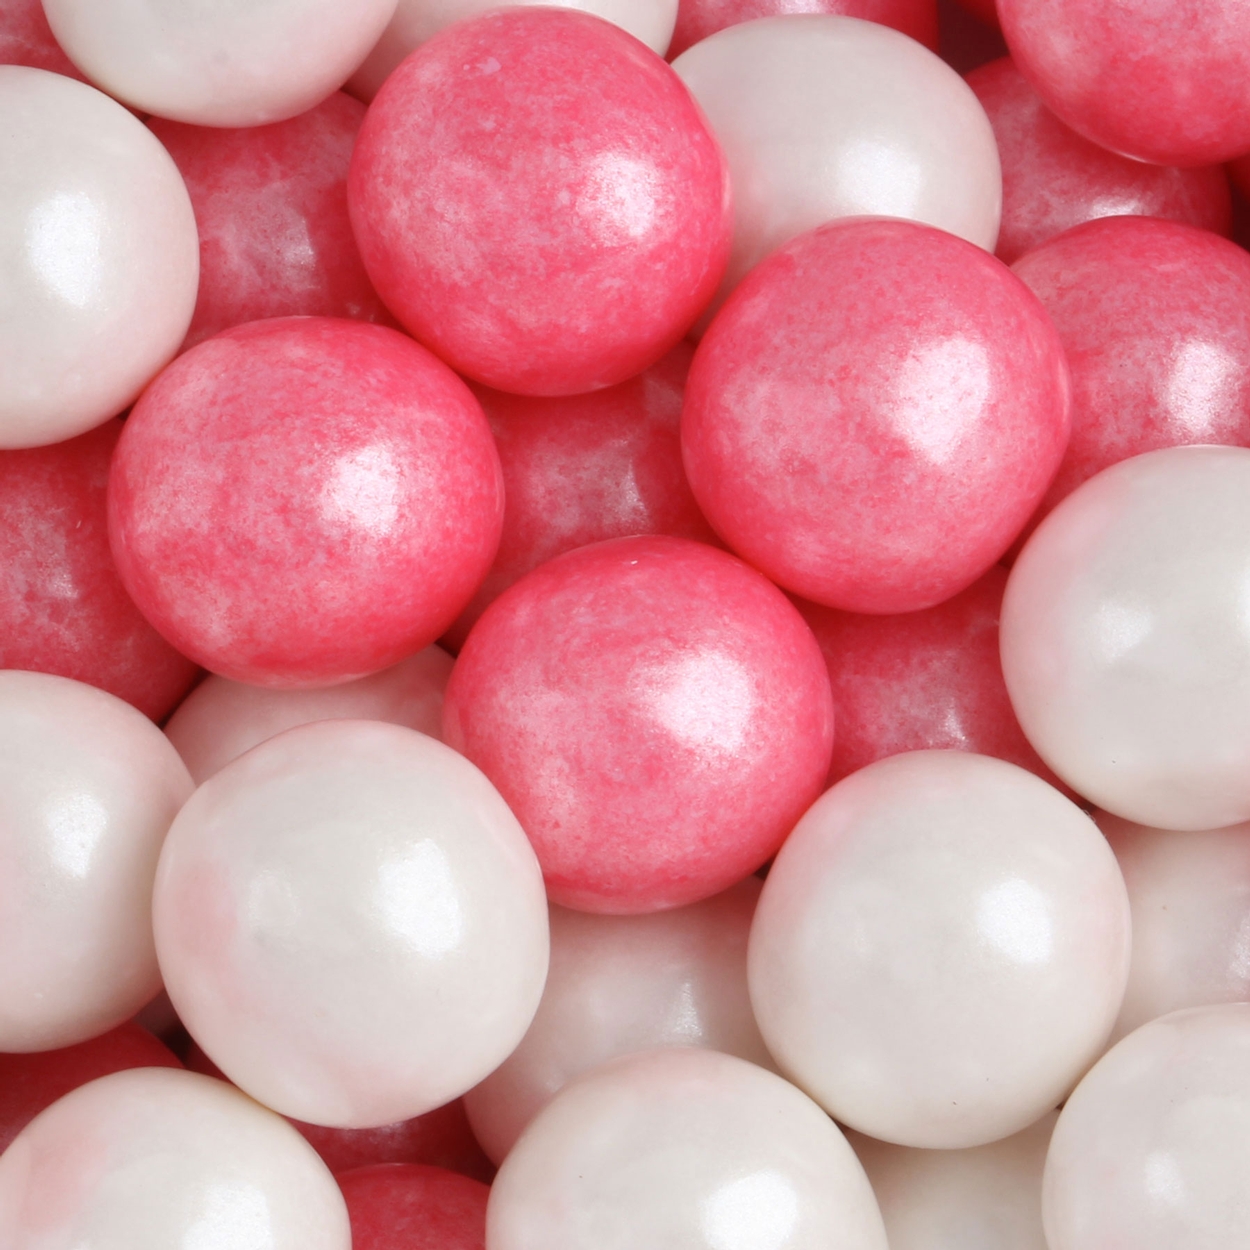 Shimmer White Gumballs - 2 lb. - Candy Favorites